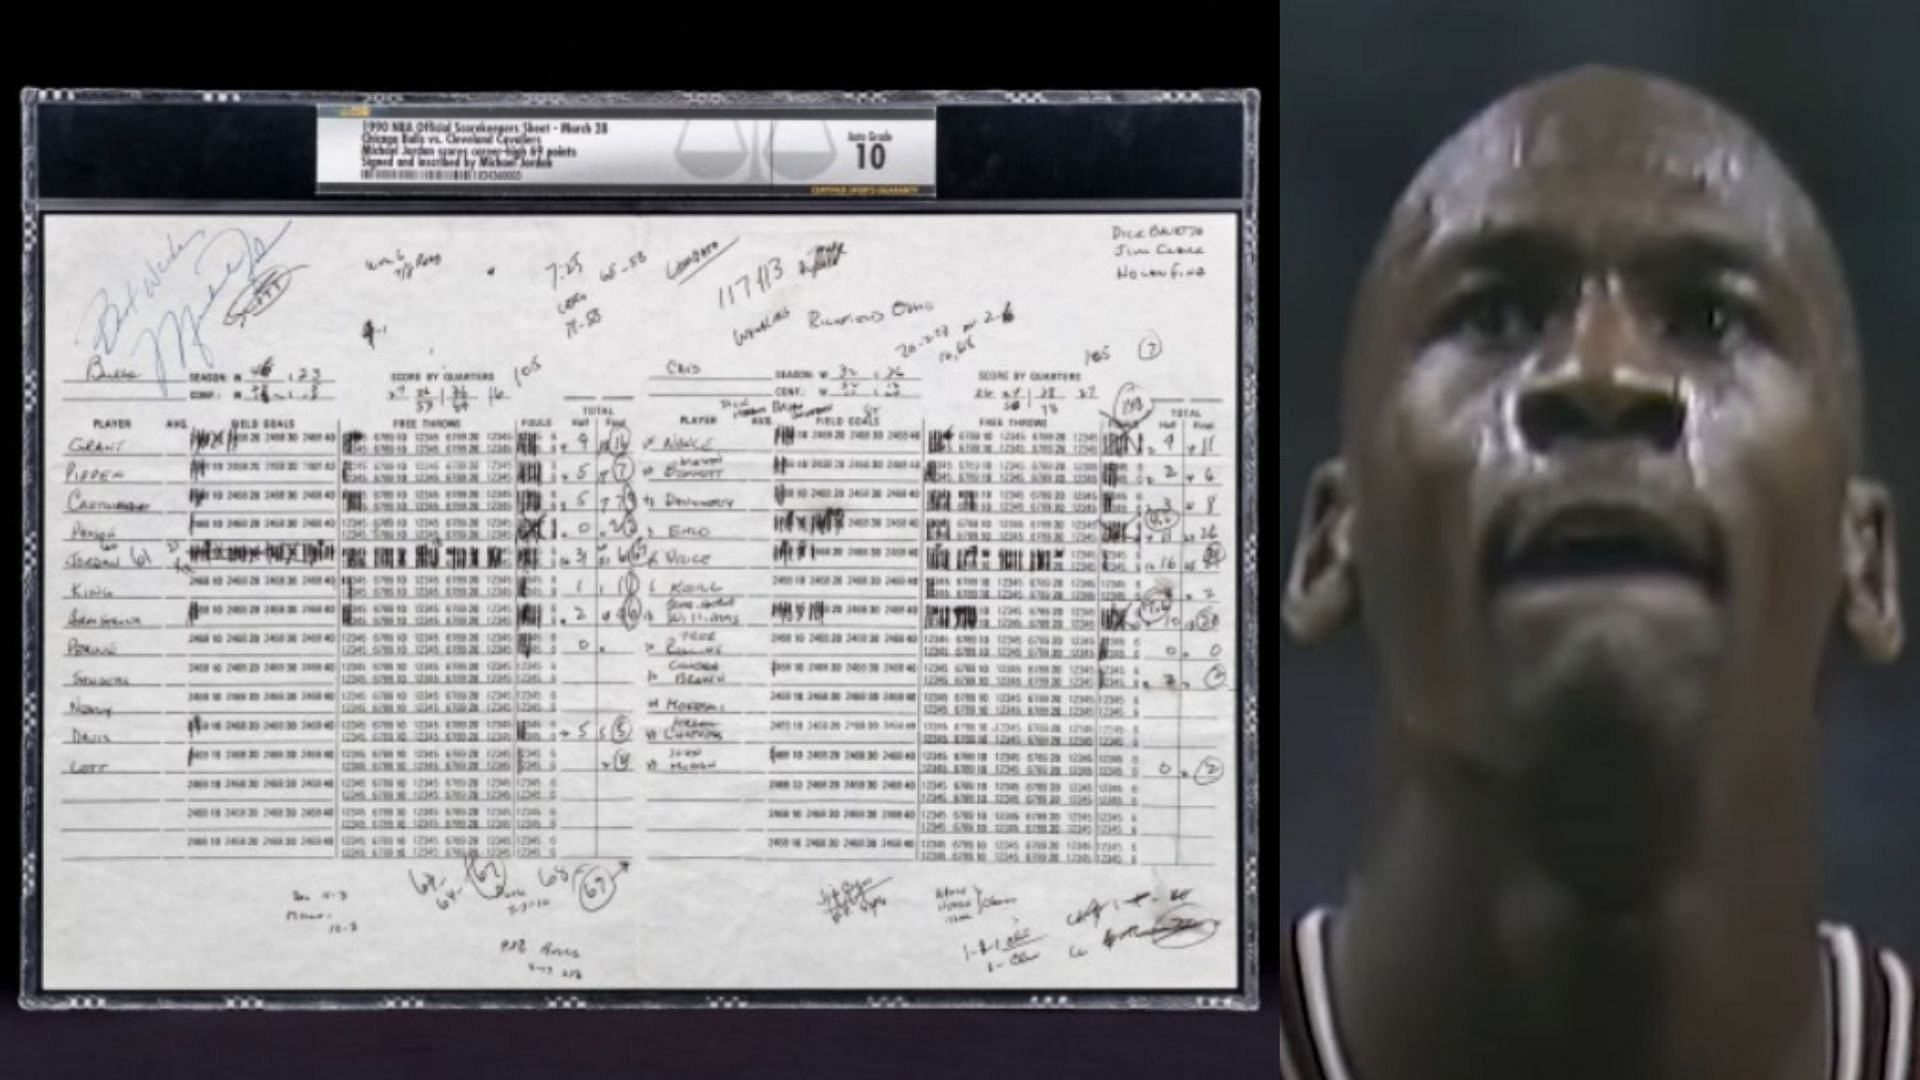 Score sheet from Michael Jordan